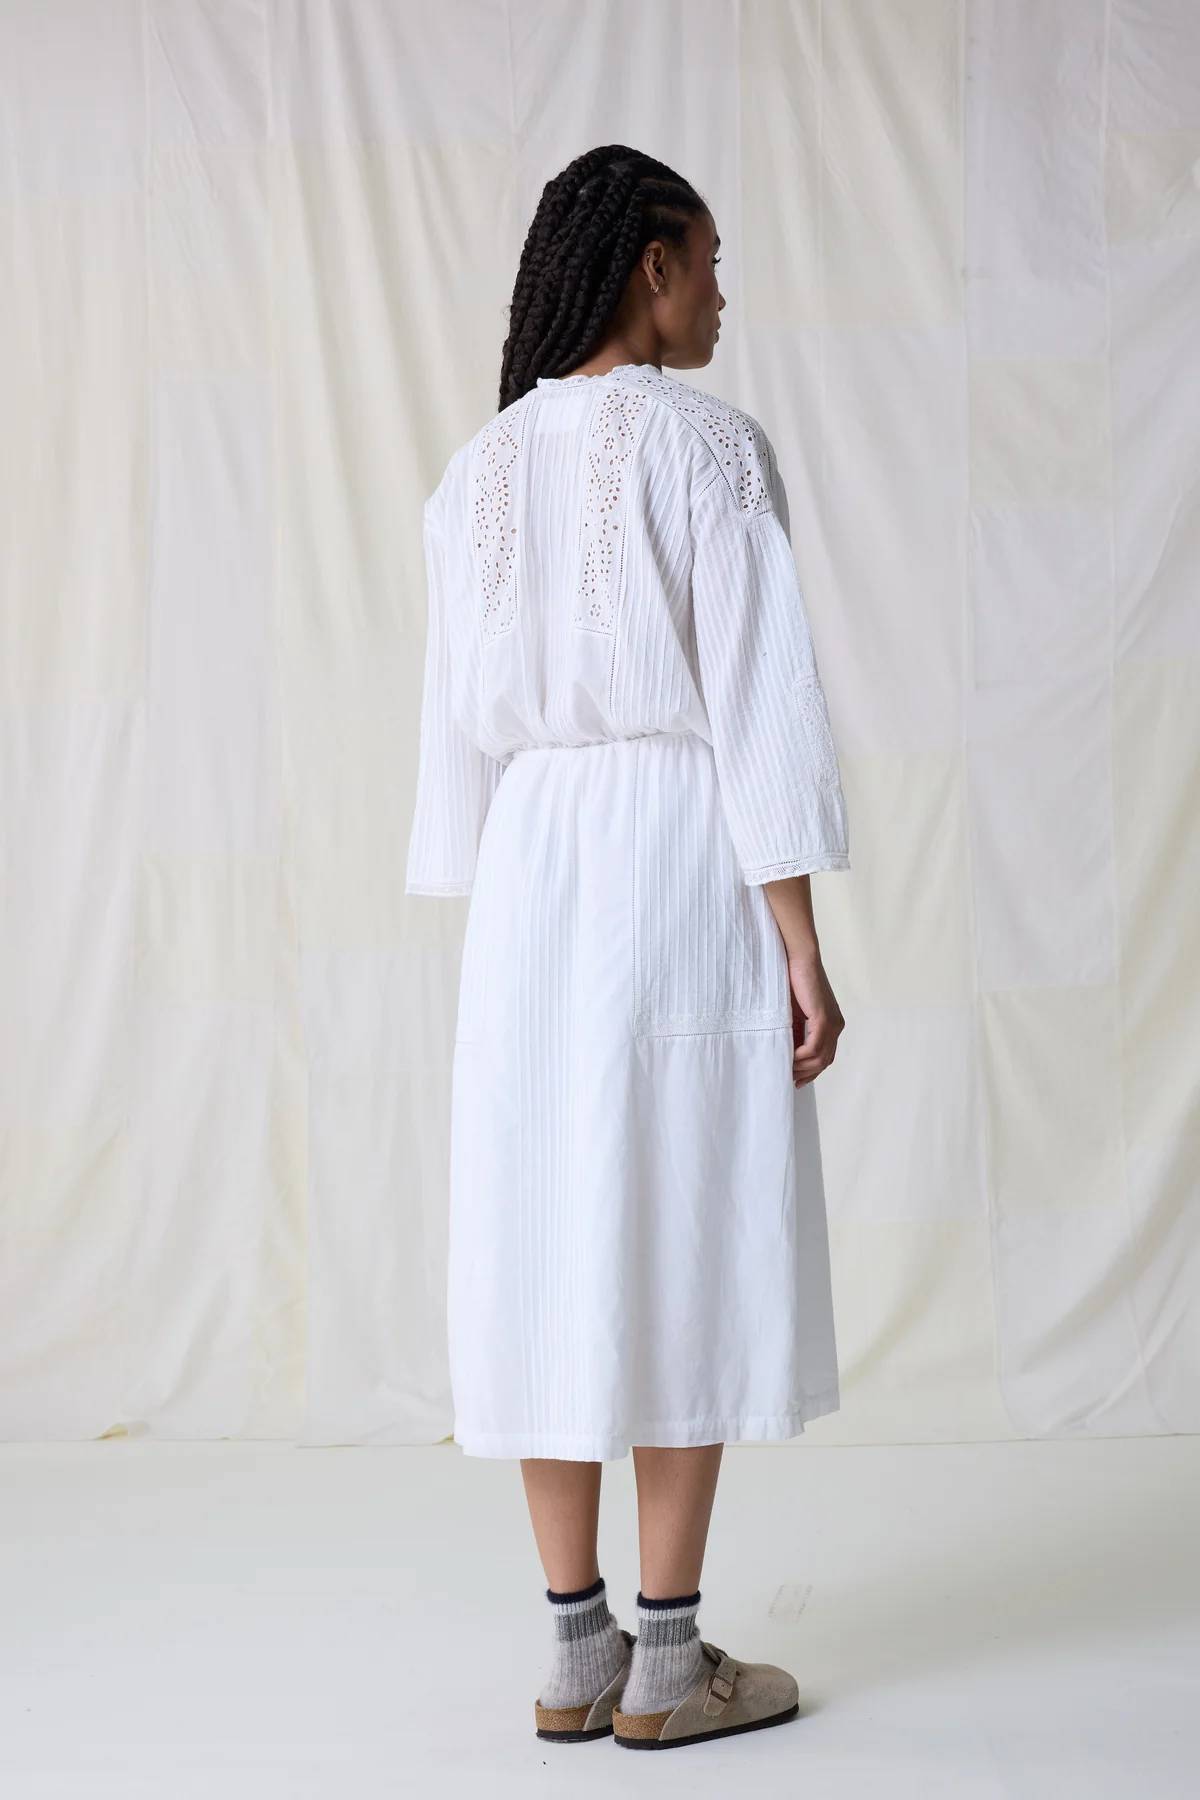 Dress Roxy Tc160 Roxy Tc160 Plain White